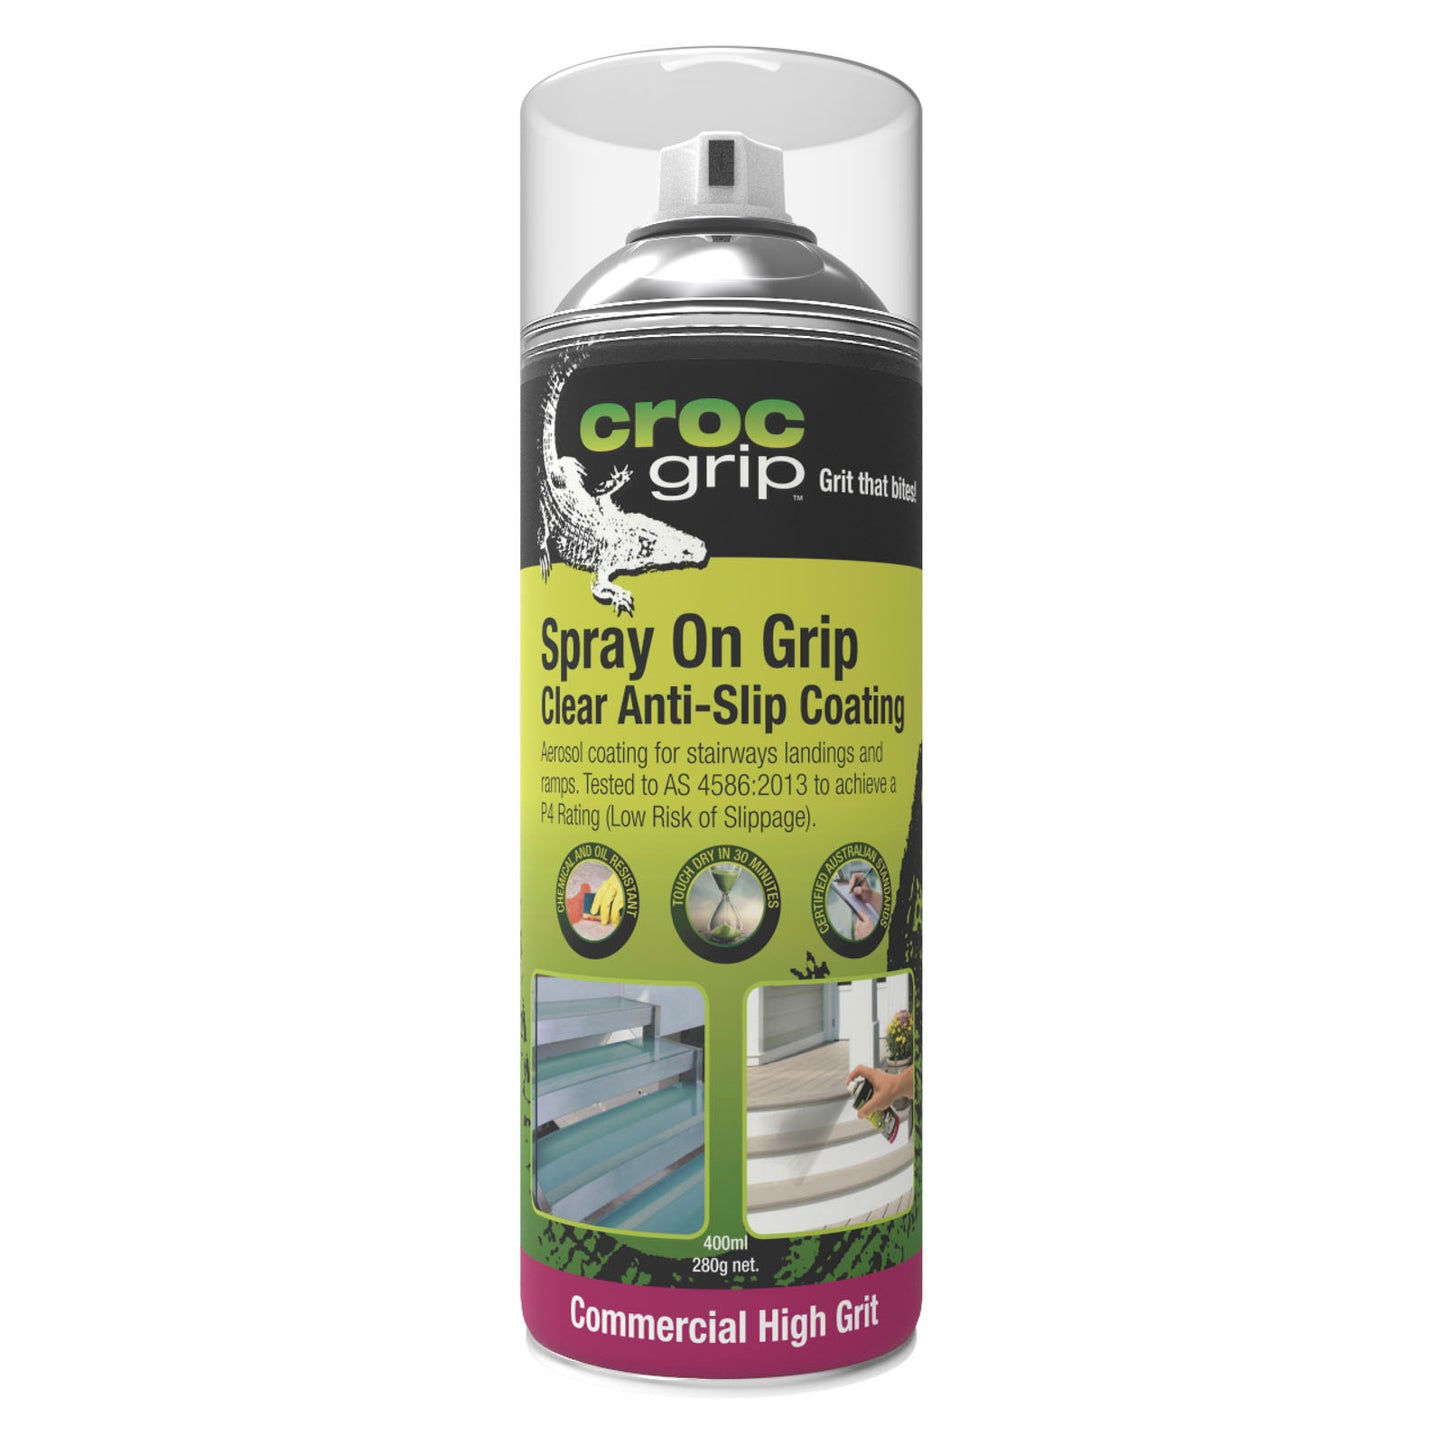 Clear Spray on Grip Anti-Slip Coating